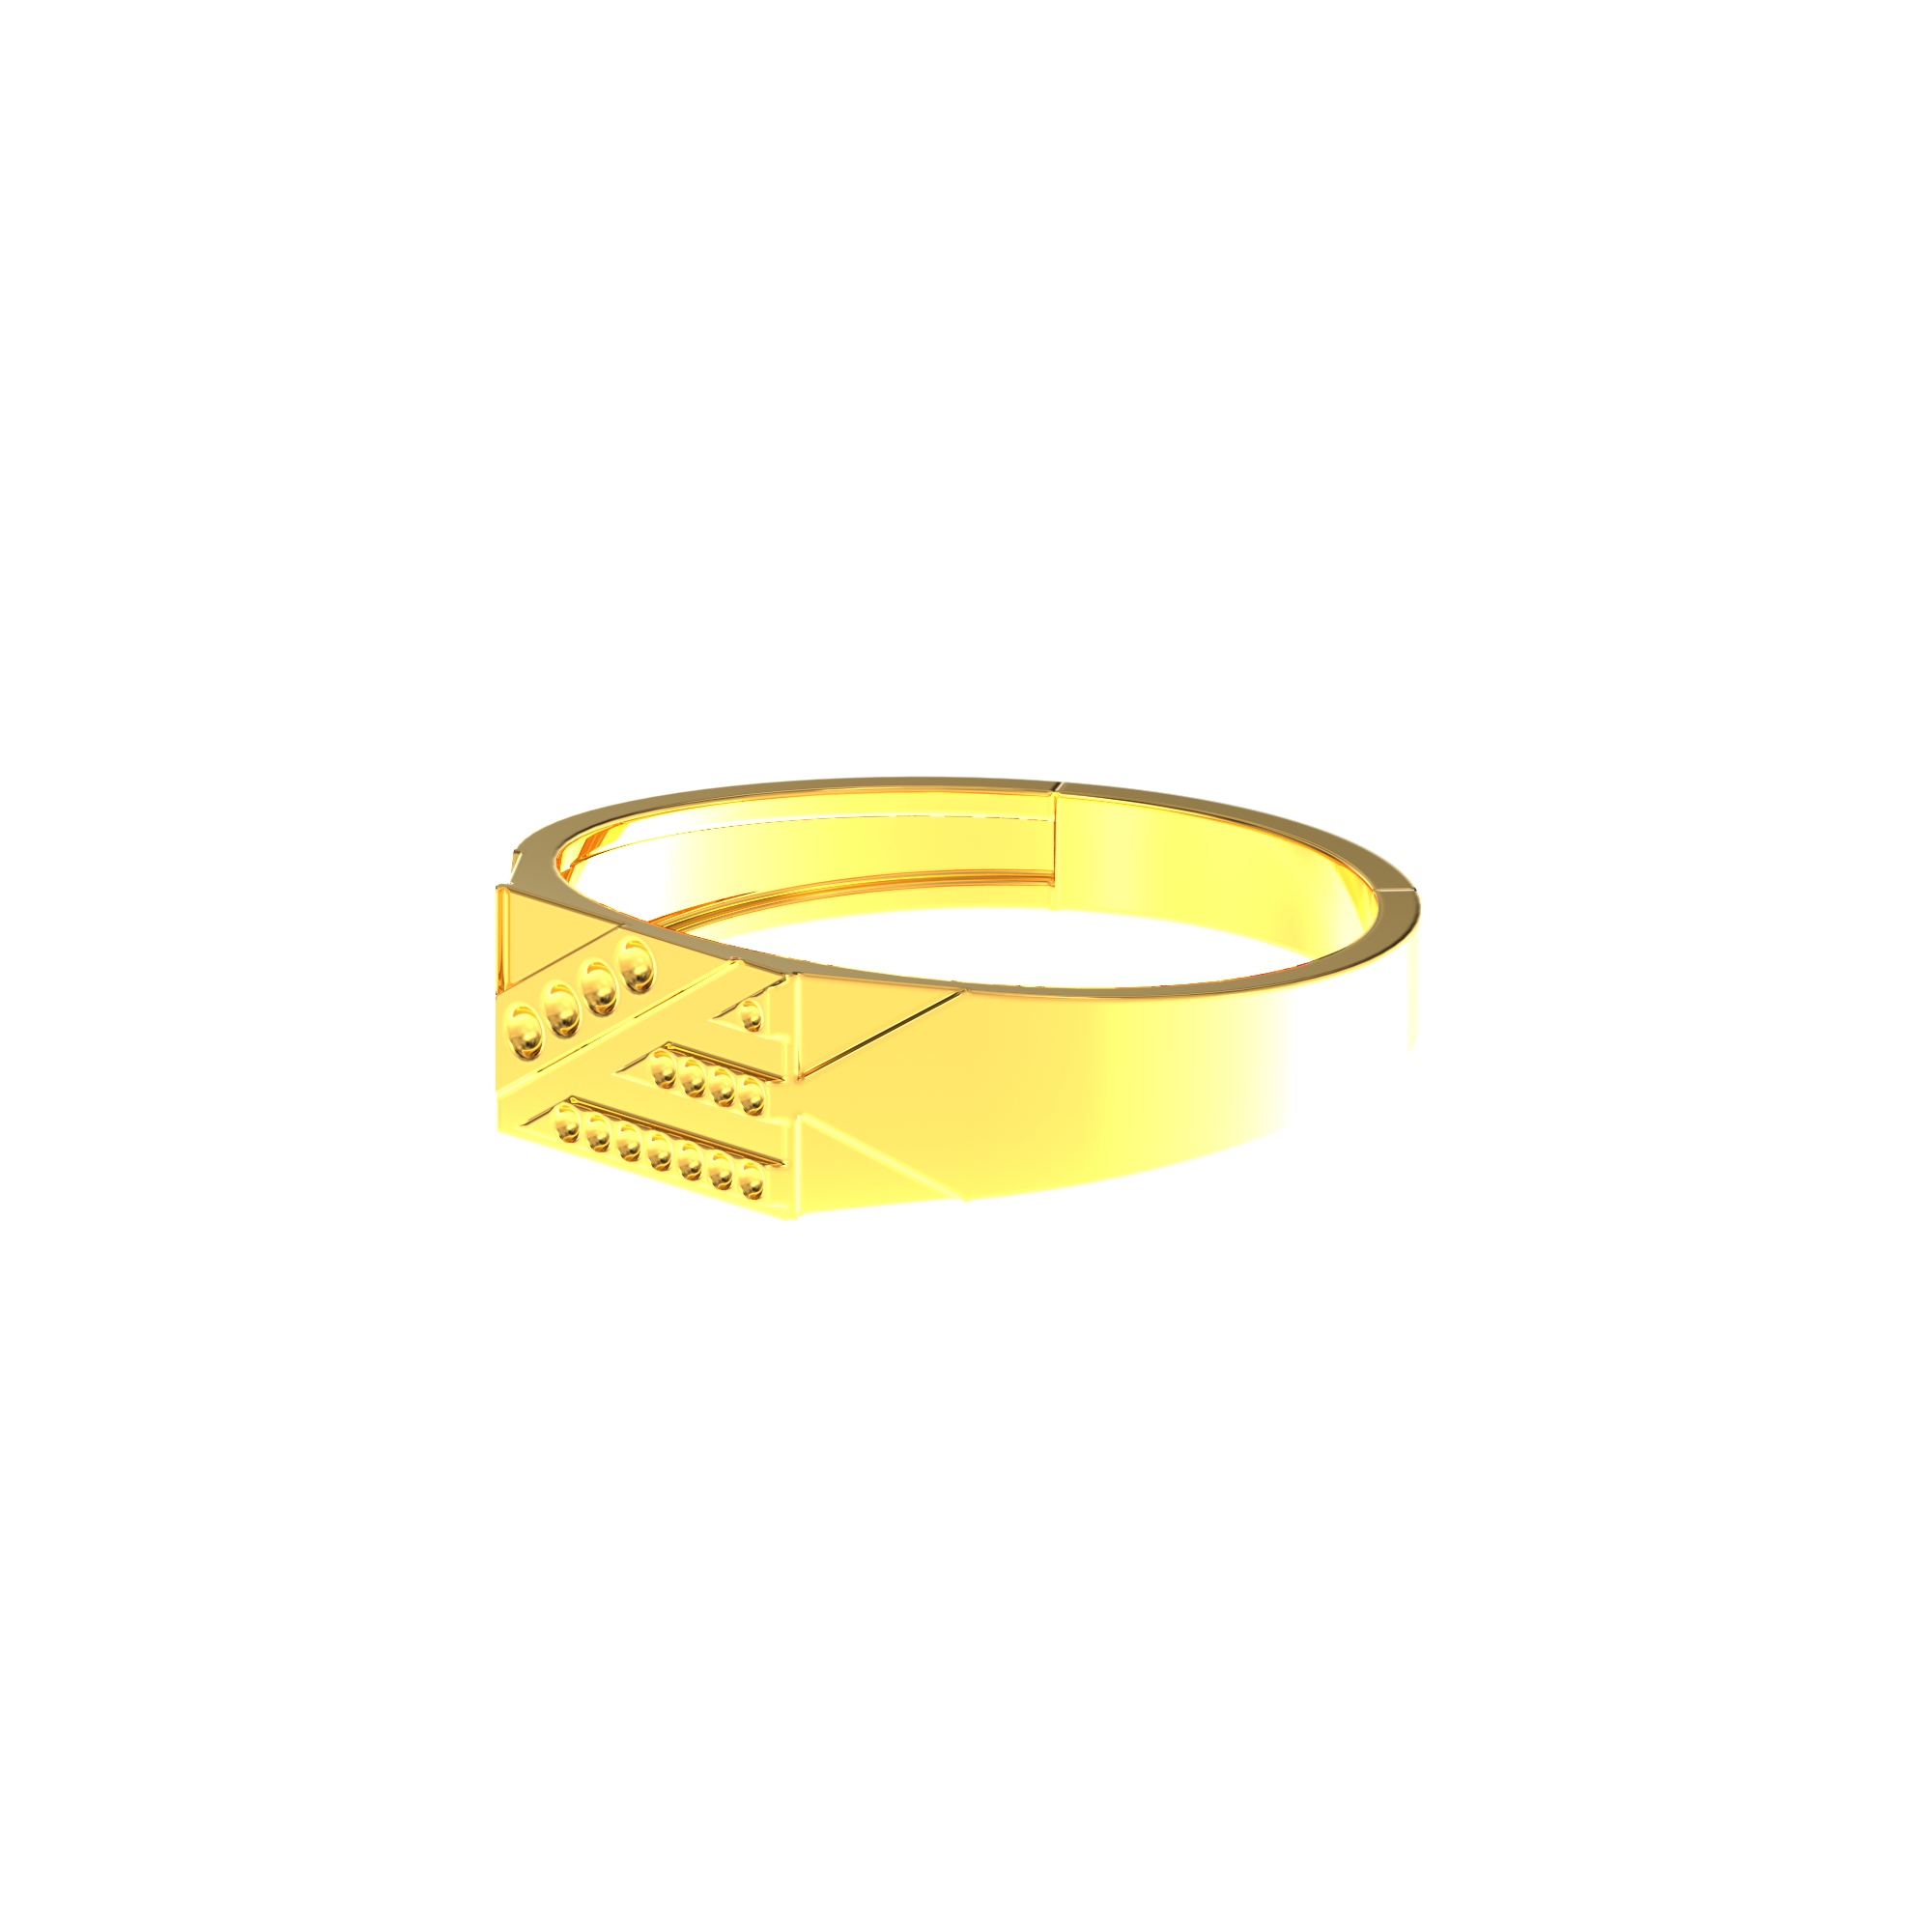 Pattern Design Gents Gold Ring-01-01